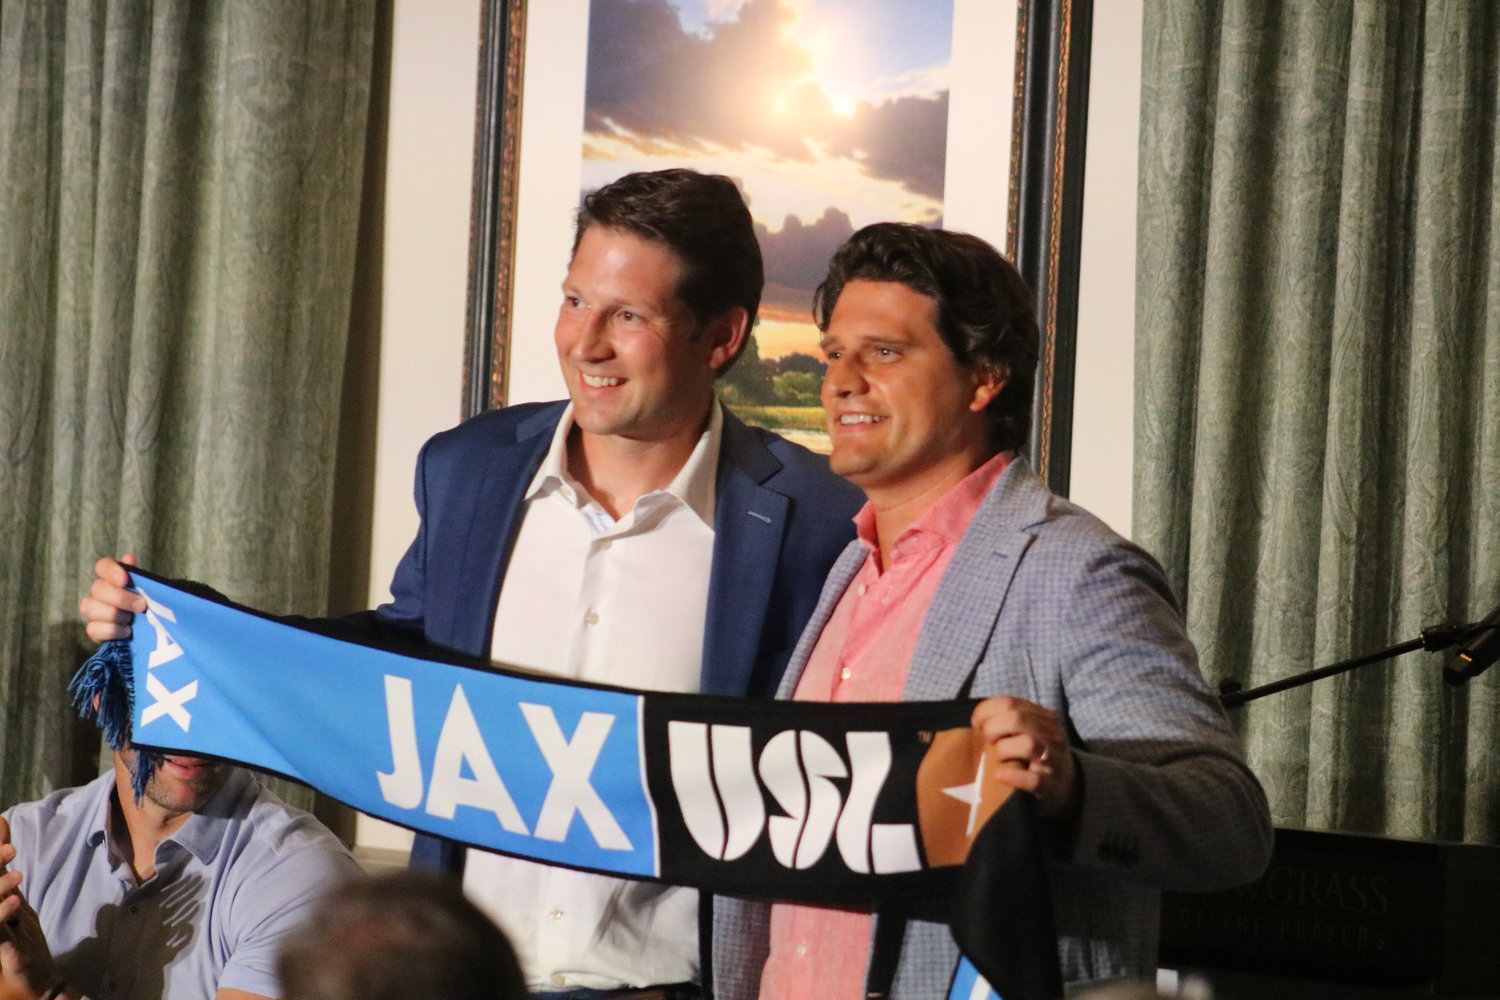 Founding owner Ricky Caplin and USL CEO Alec Papadakis hold up a JAXUSL scarf.